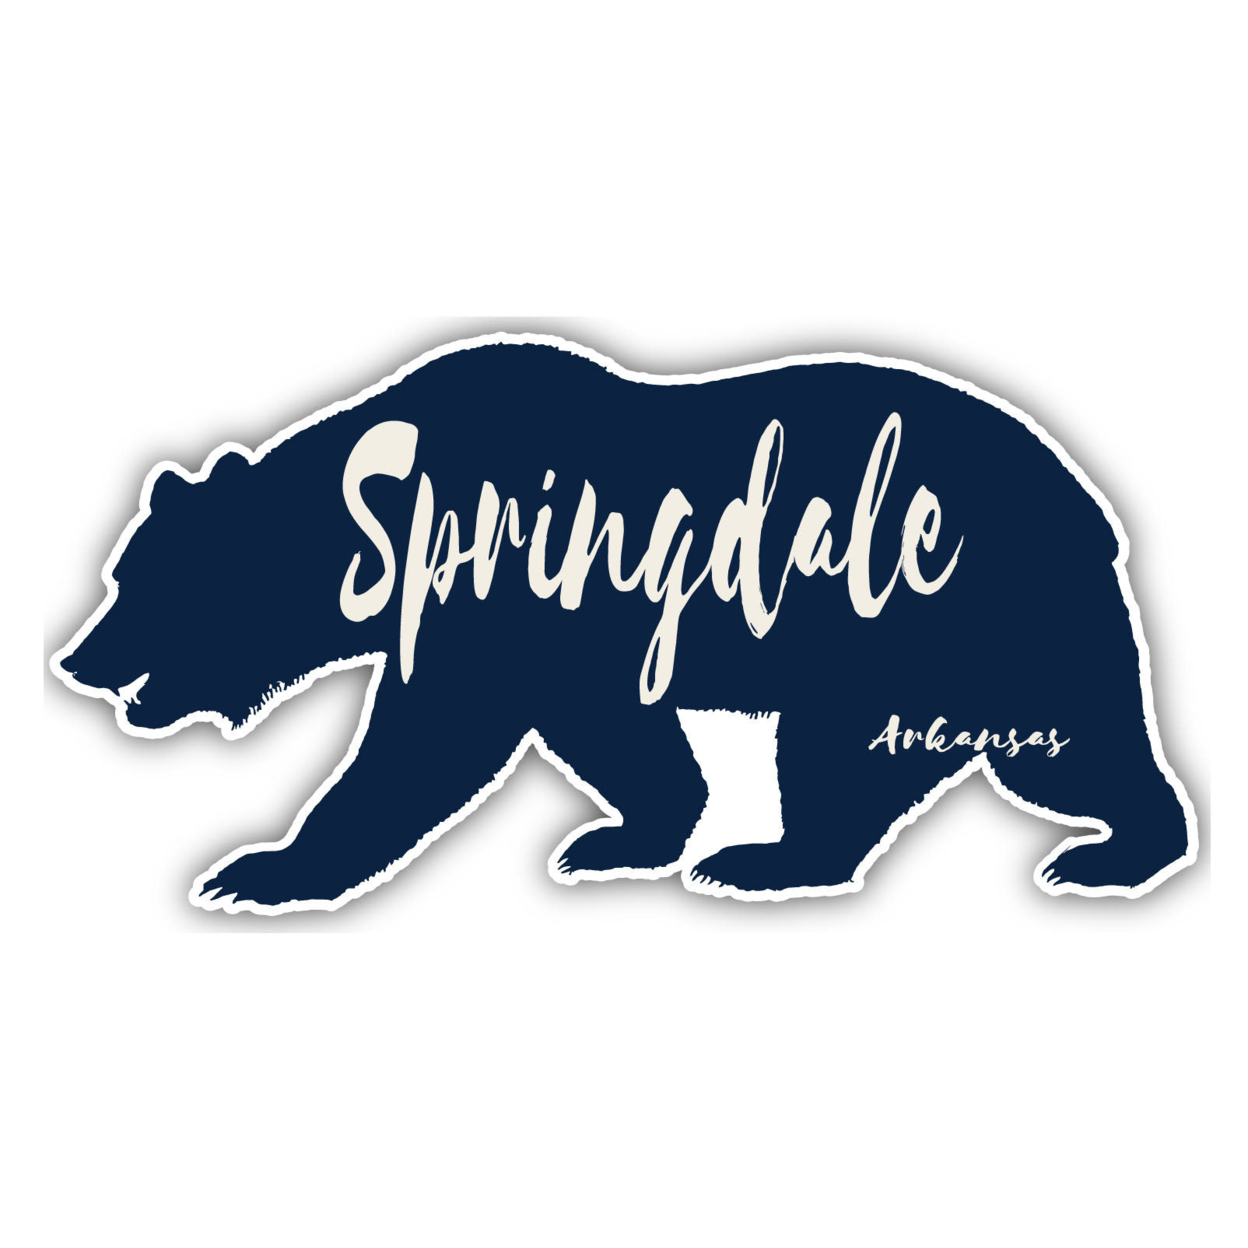 Springdale Arkansas Souvenir Decorative Stickers (Choose Theme And Size) - Single Unit, 4-Inch, Camp Life